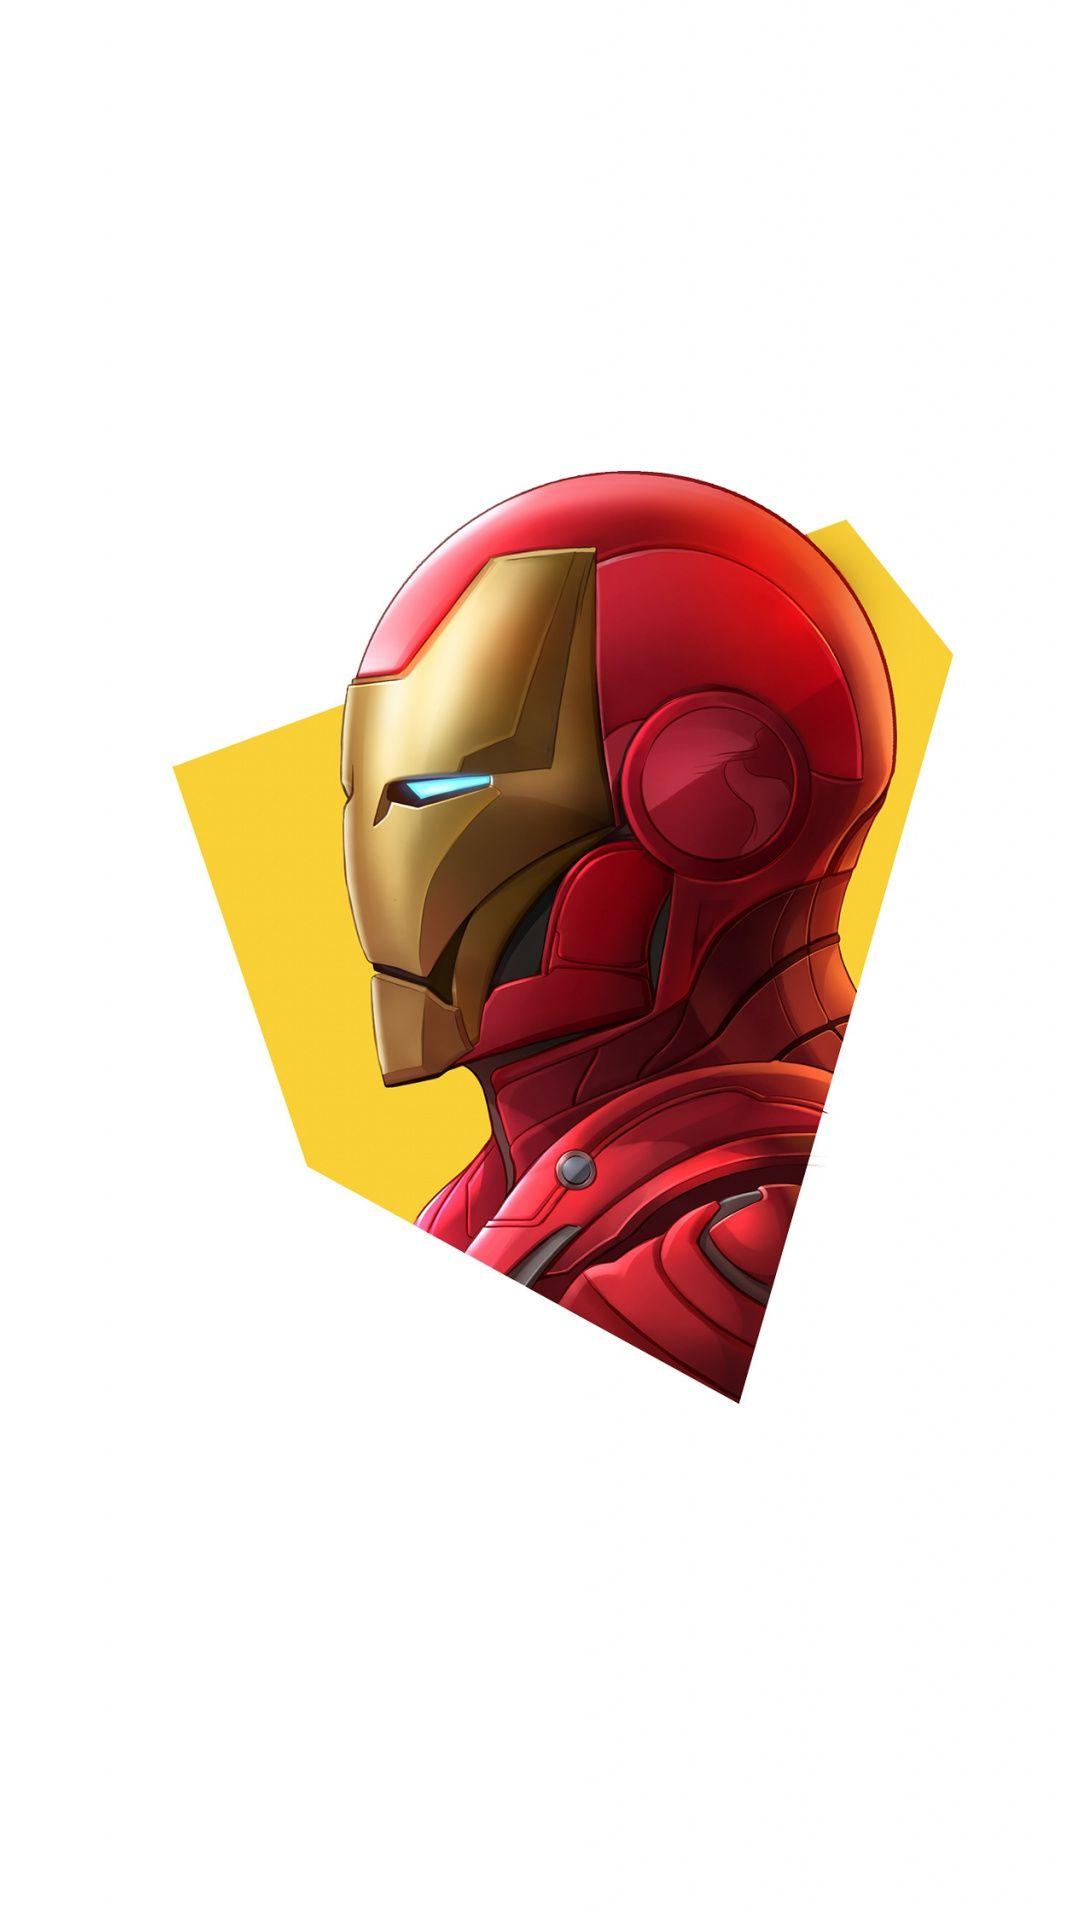 Iron man, simple and minimal, art wallpaper. superheroes